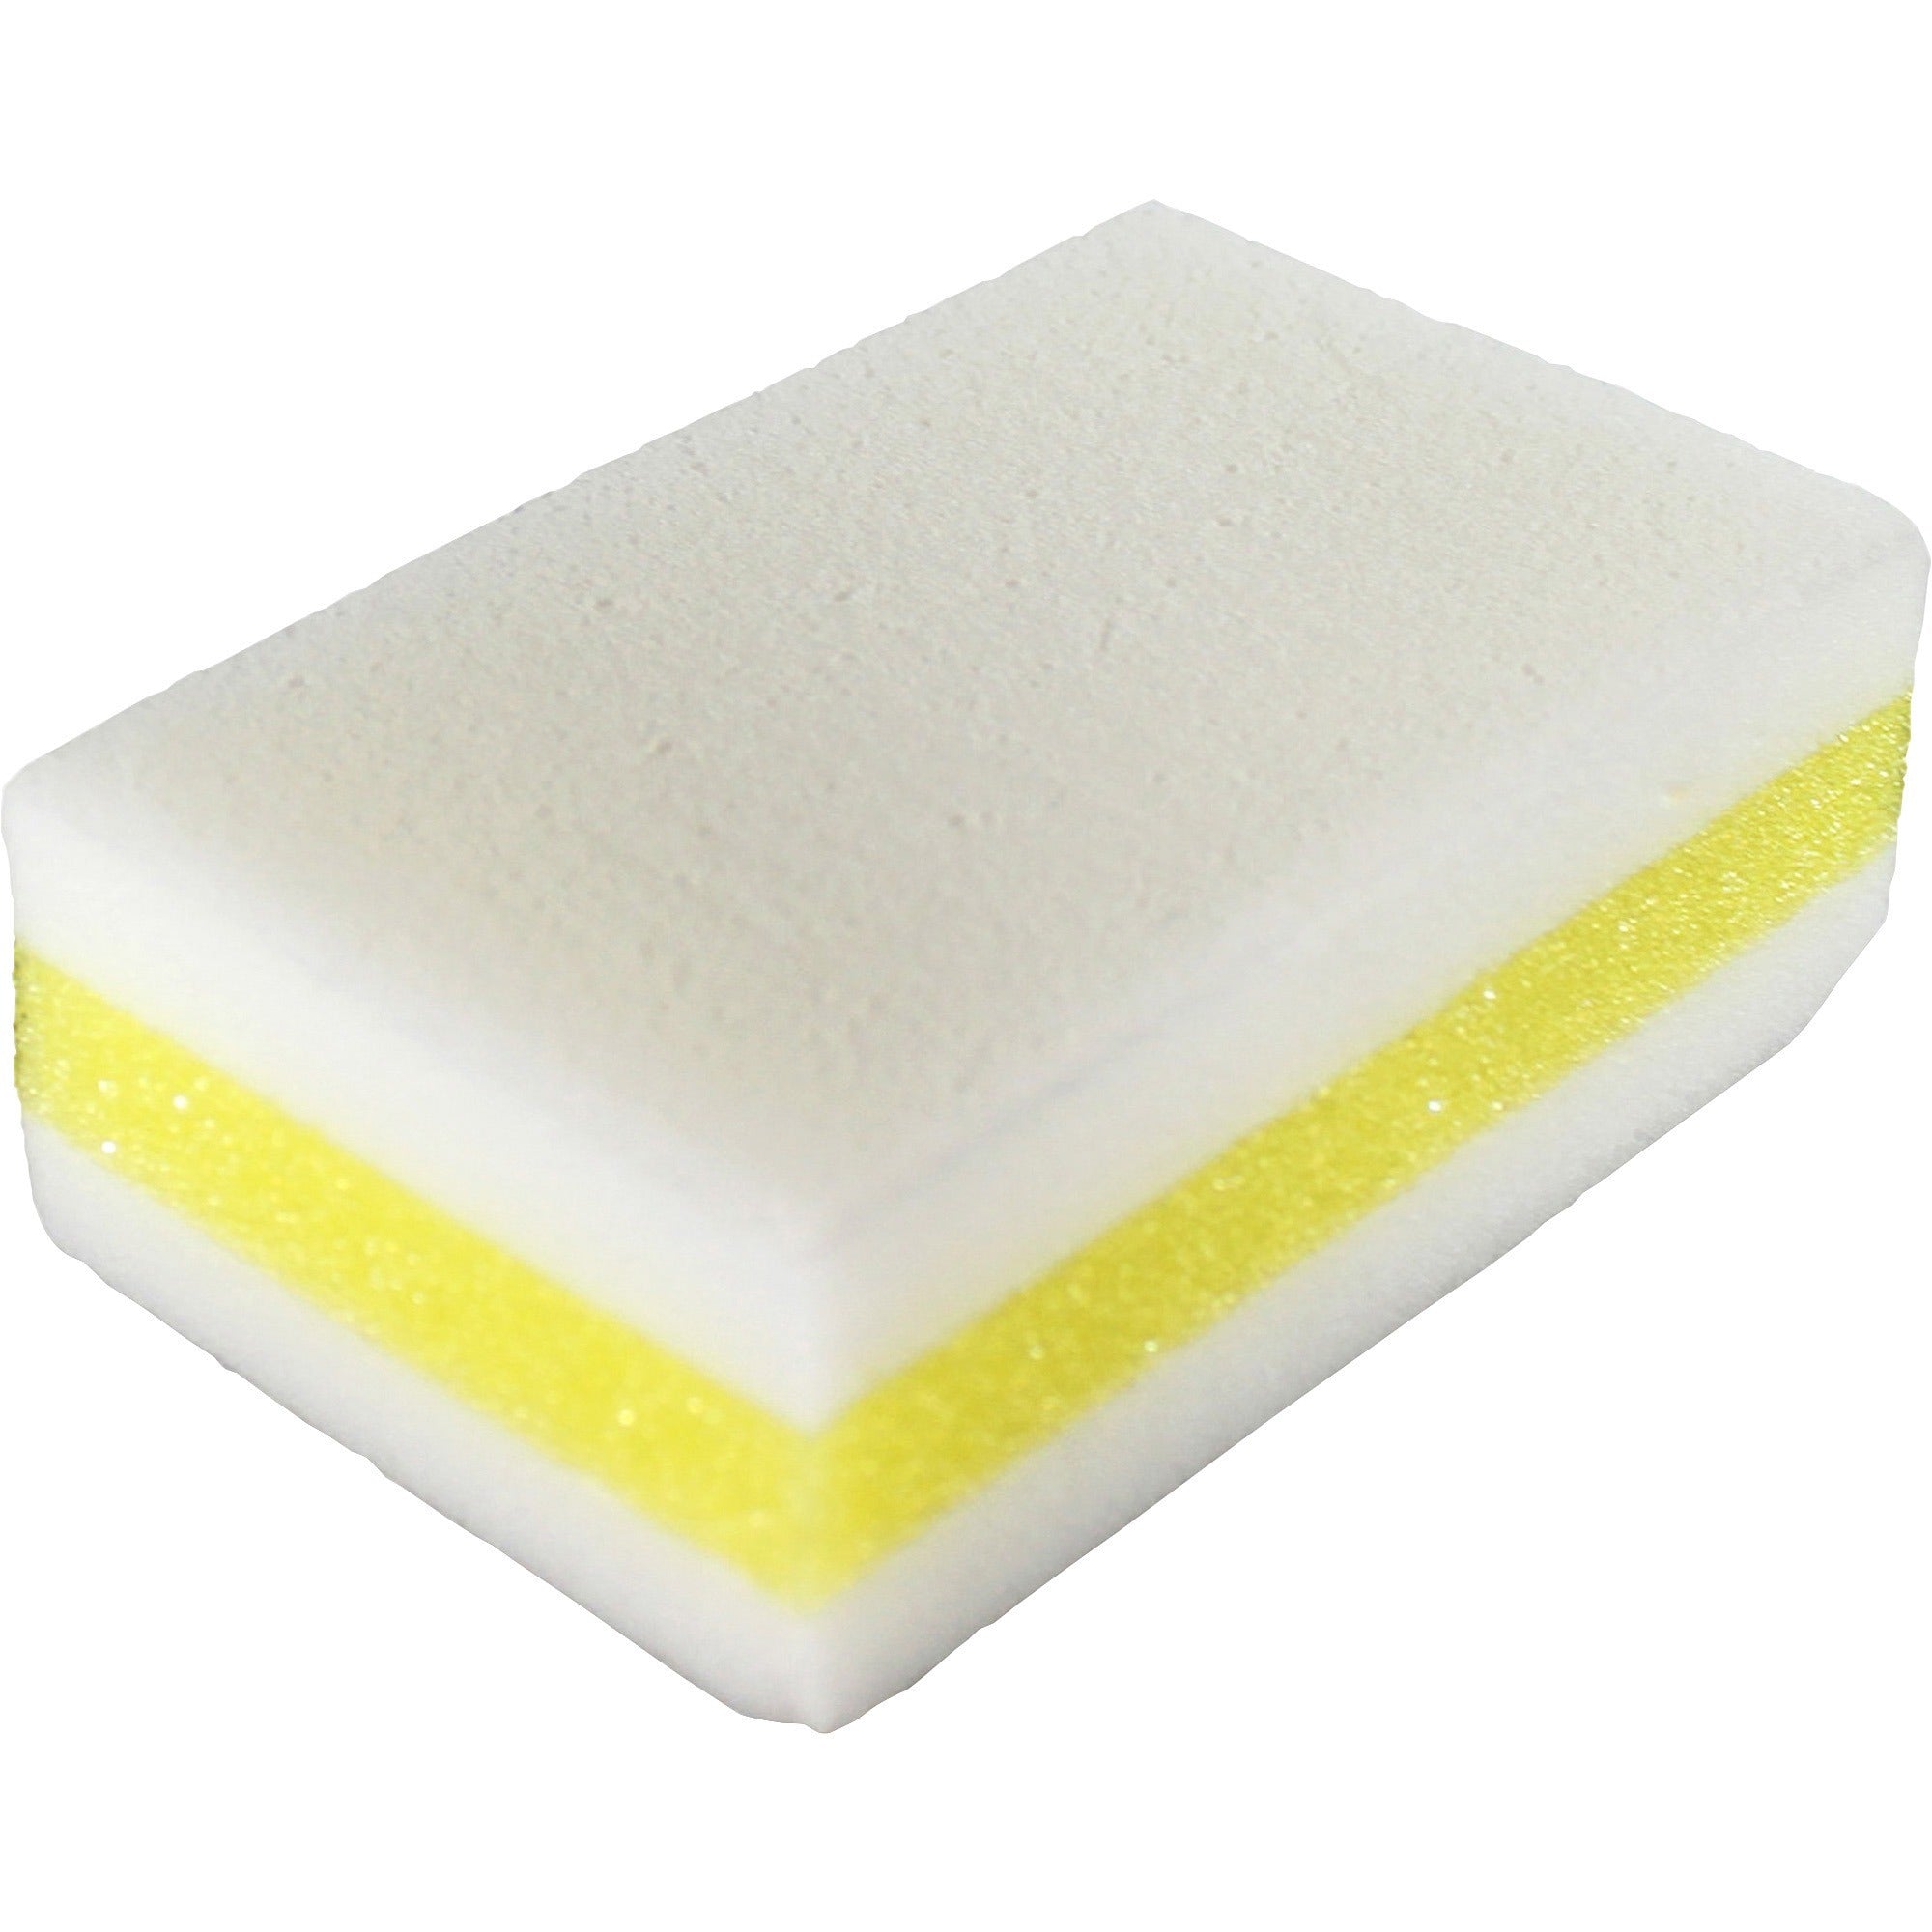 genuine-joe-dual-sided-melamine-eraser-amazing-sponges-45-height-x-45-width-x-28-depth-5-pack-cellulose-white-yellow_gjo85165 - 1